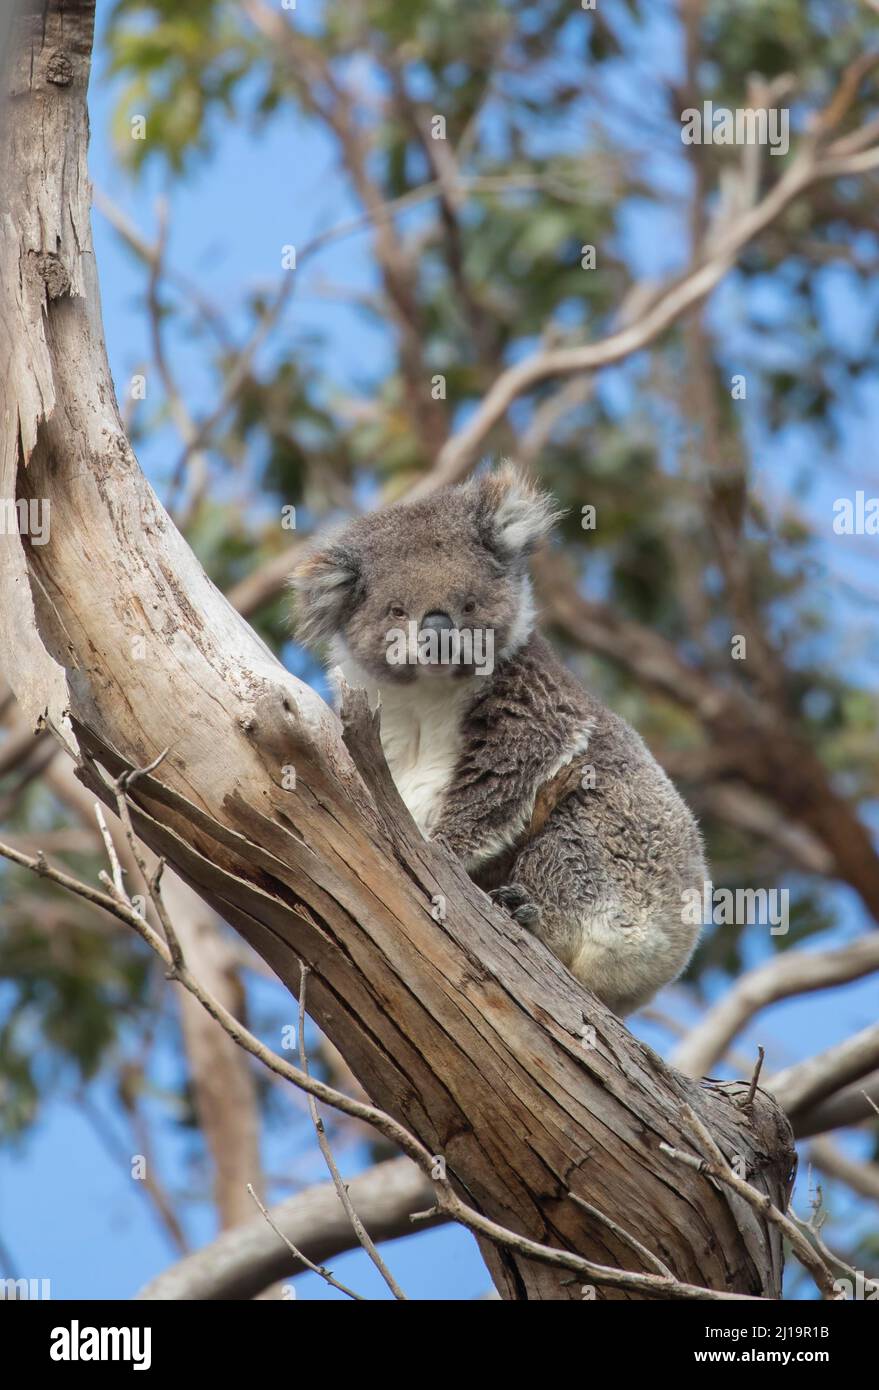 Koala (Phascolarctos cinereus) adult in an Eucalyptus tree, Victoria, Australia Stock Photo